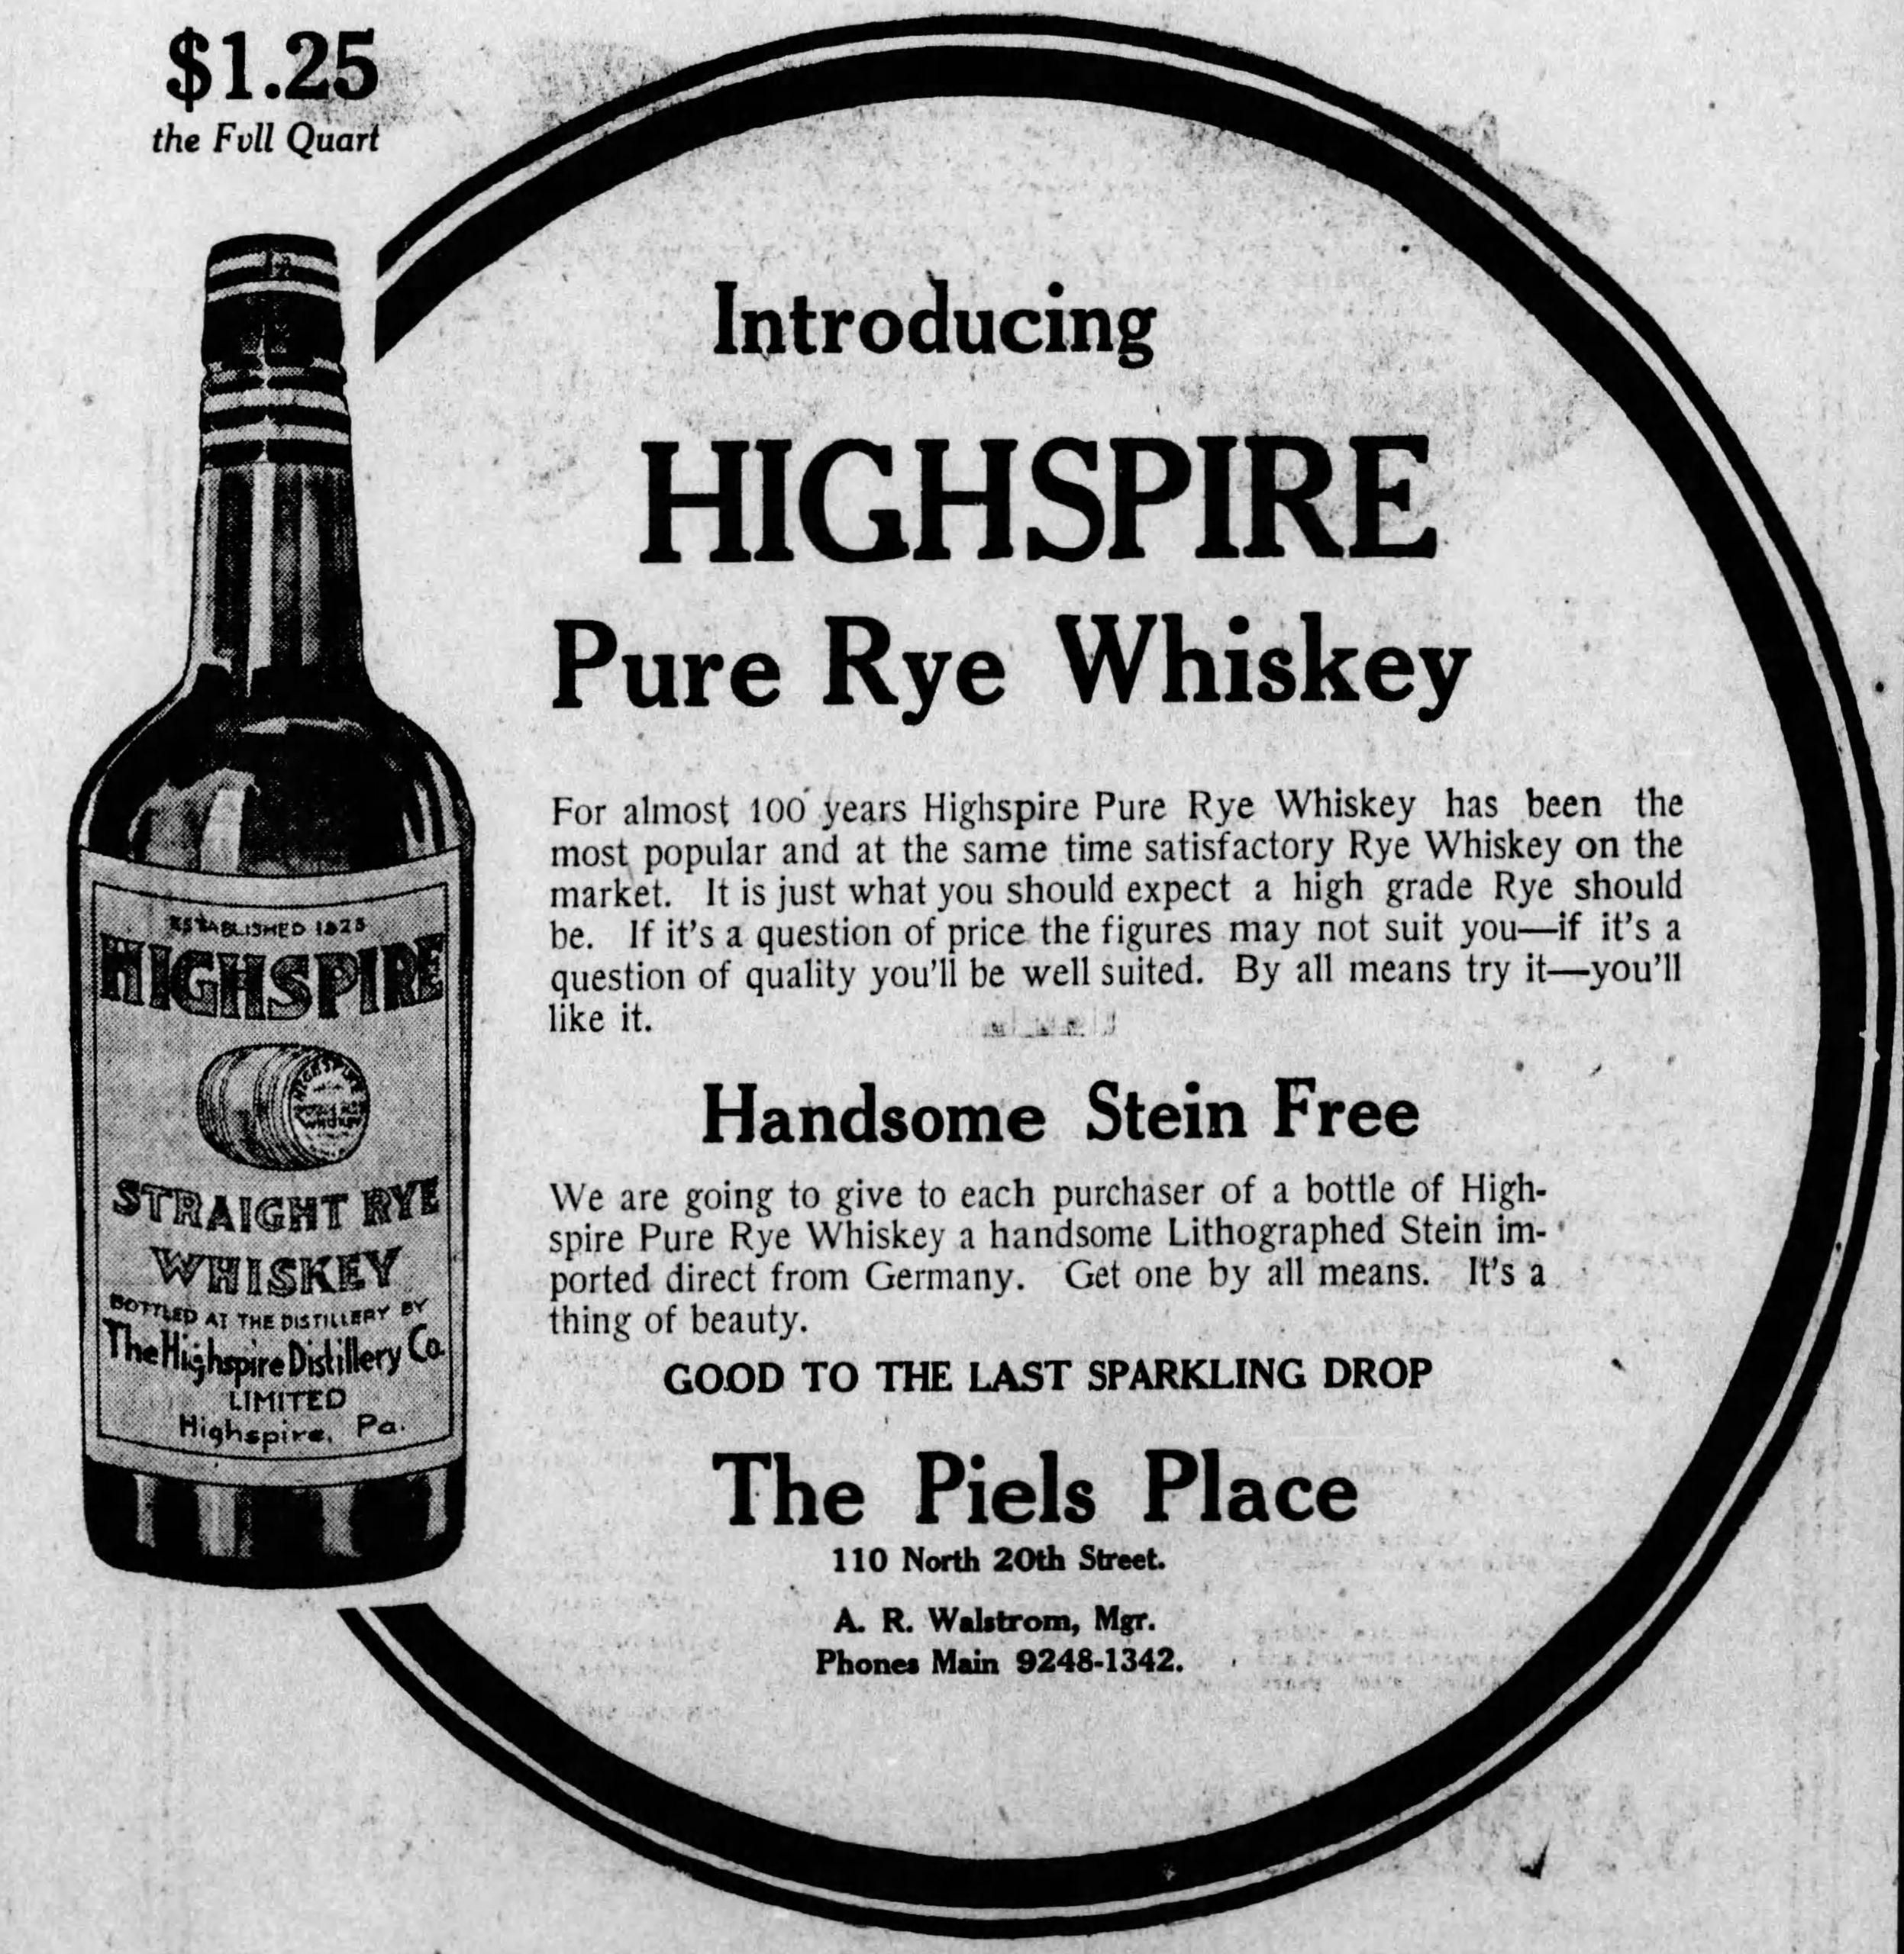 Pennsylvania’s Highspire Distillery Company